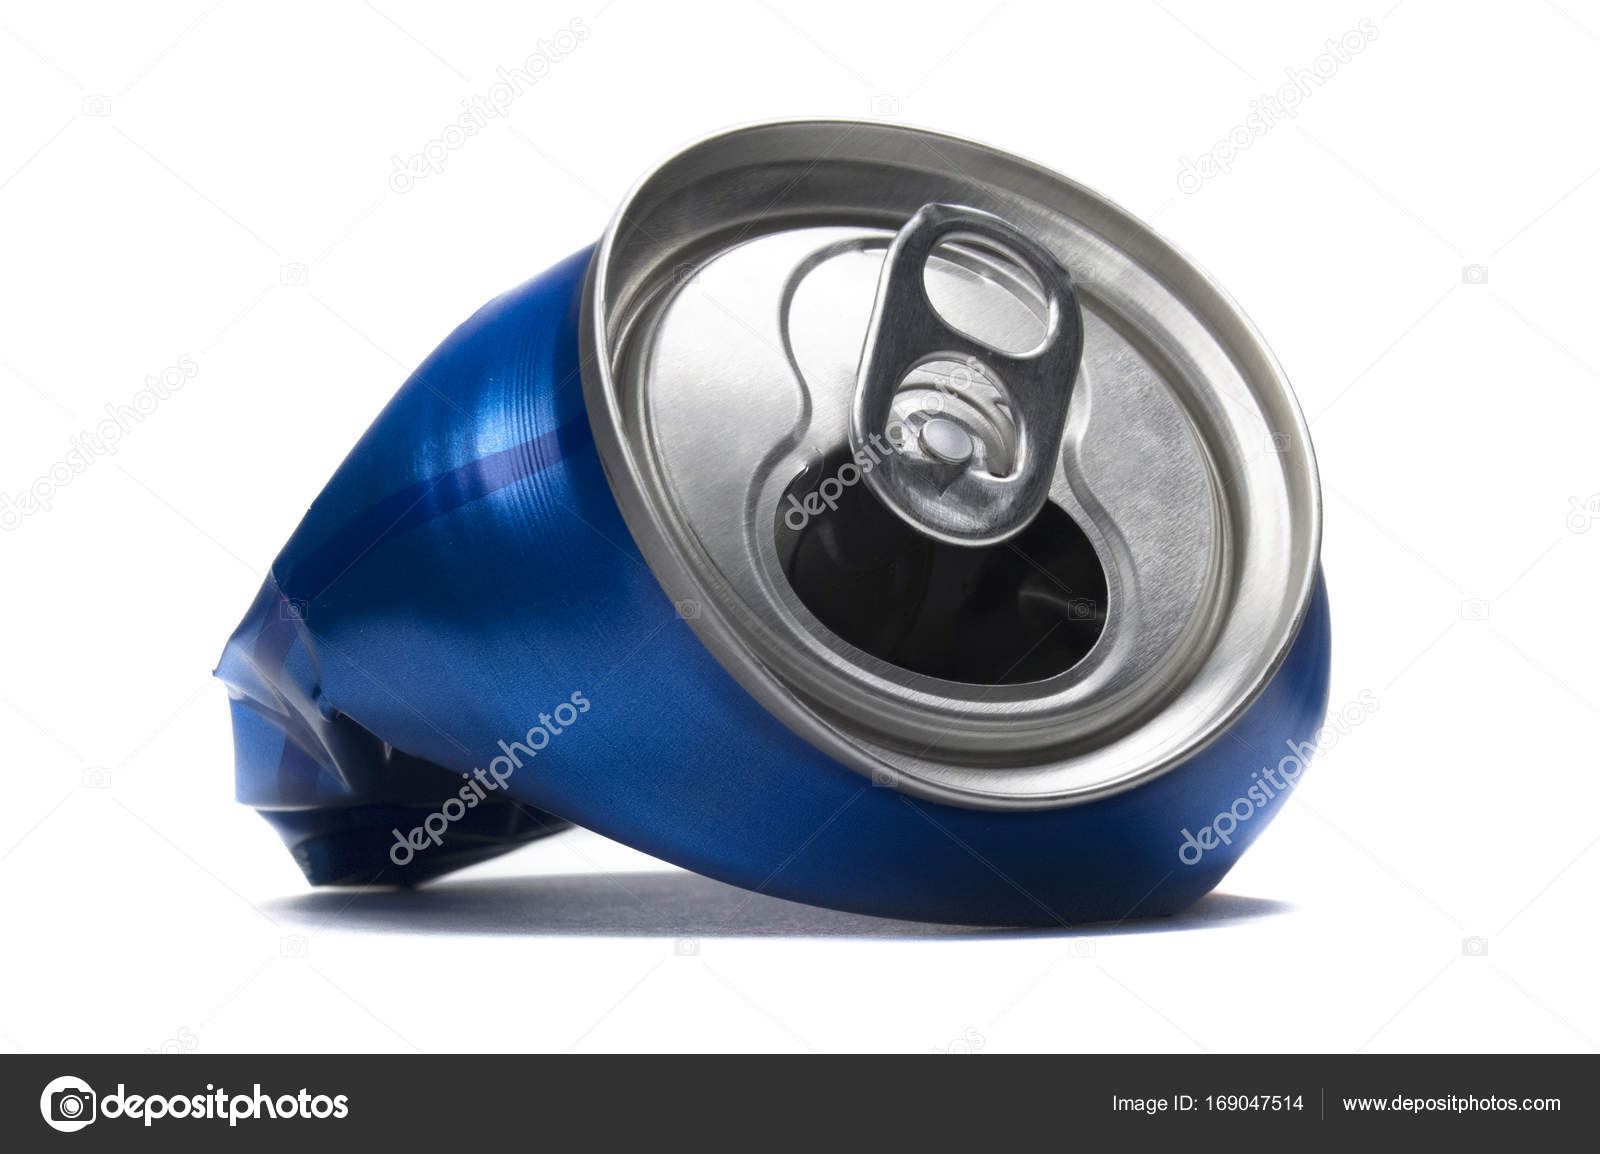 smashed soda can